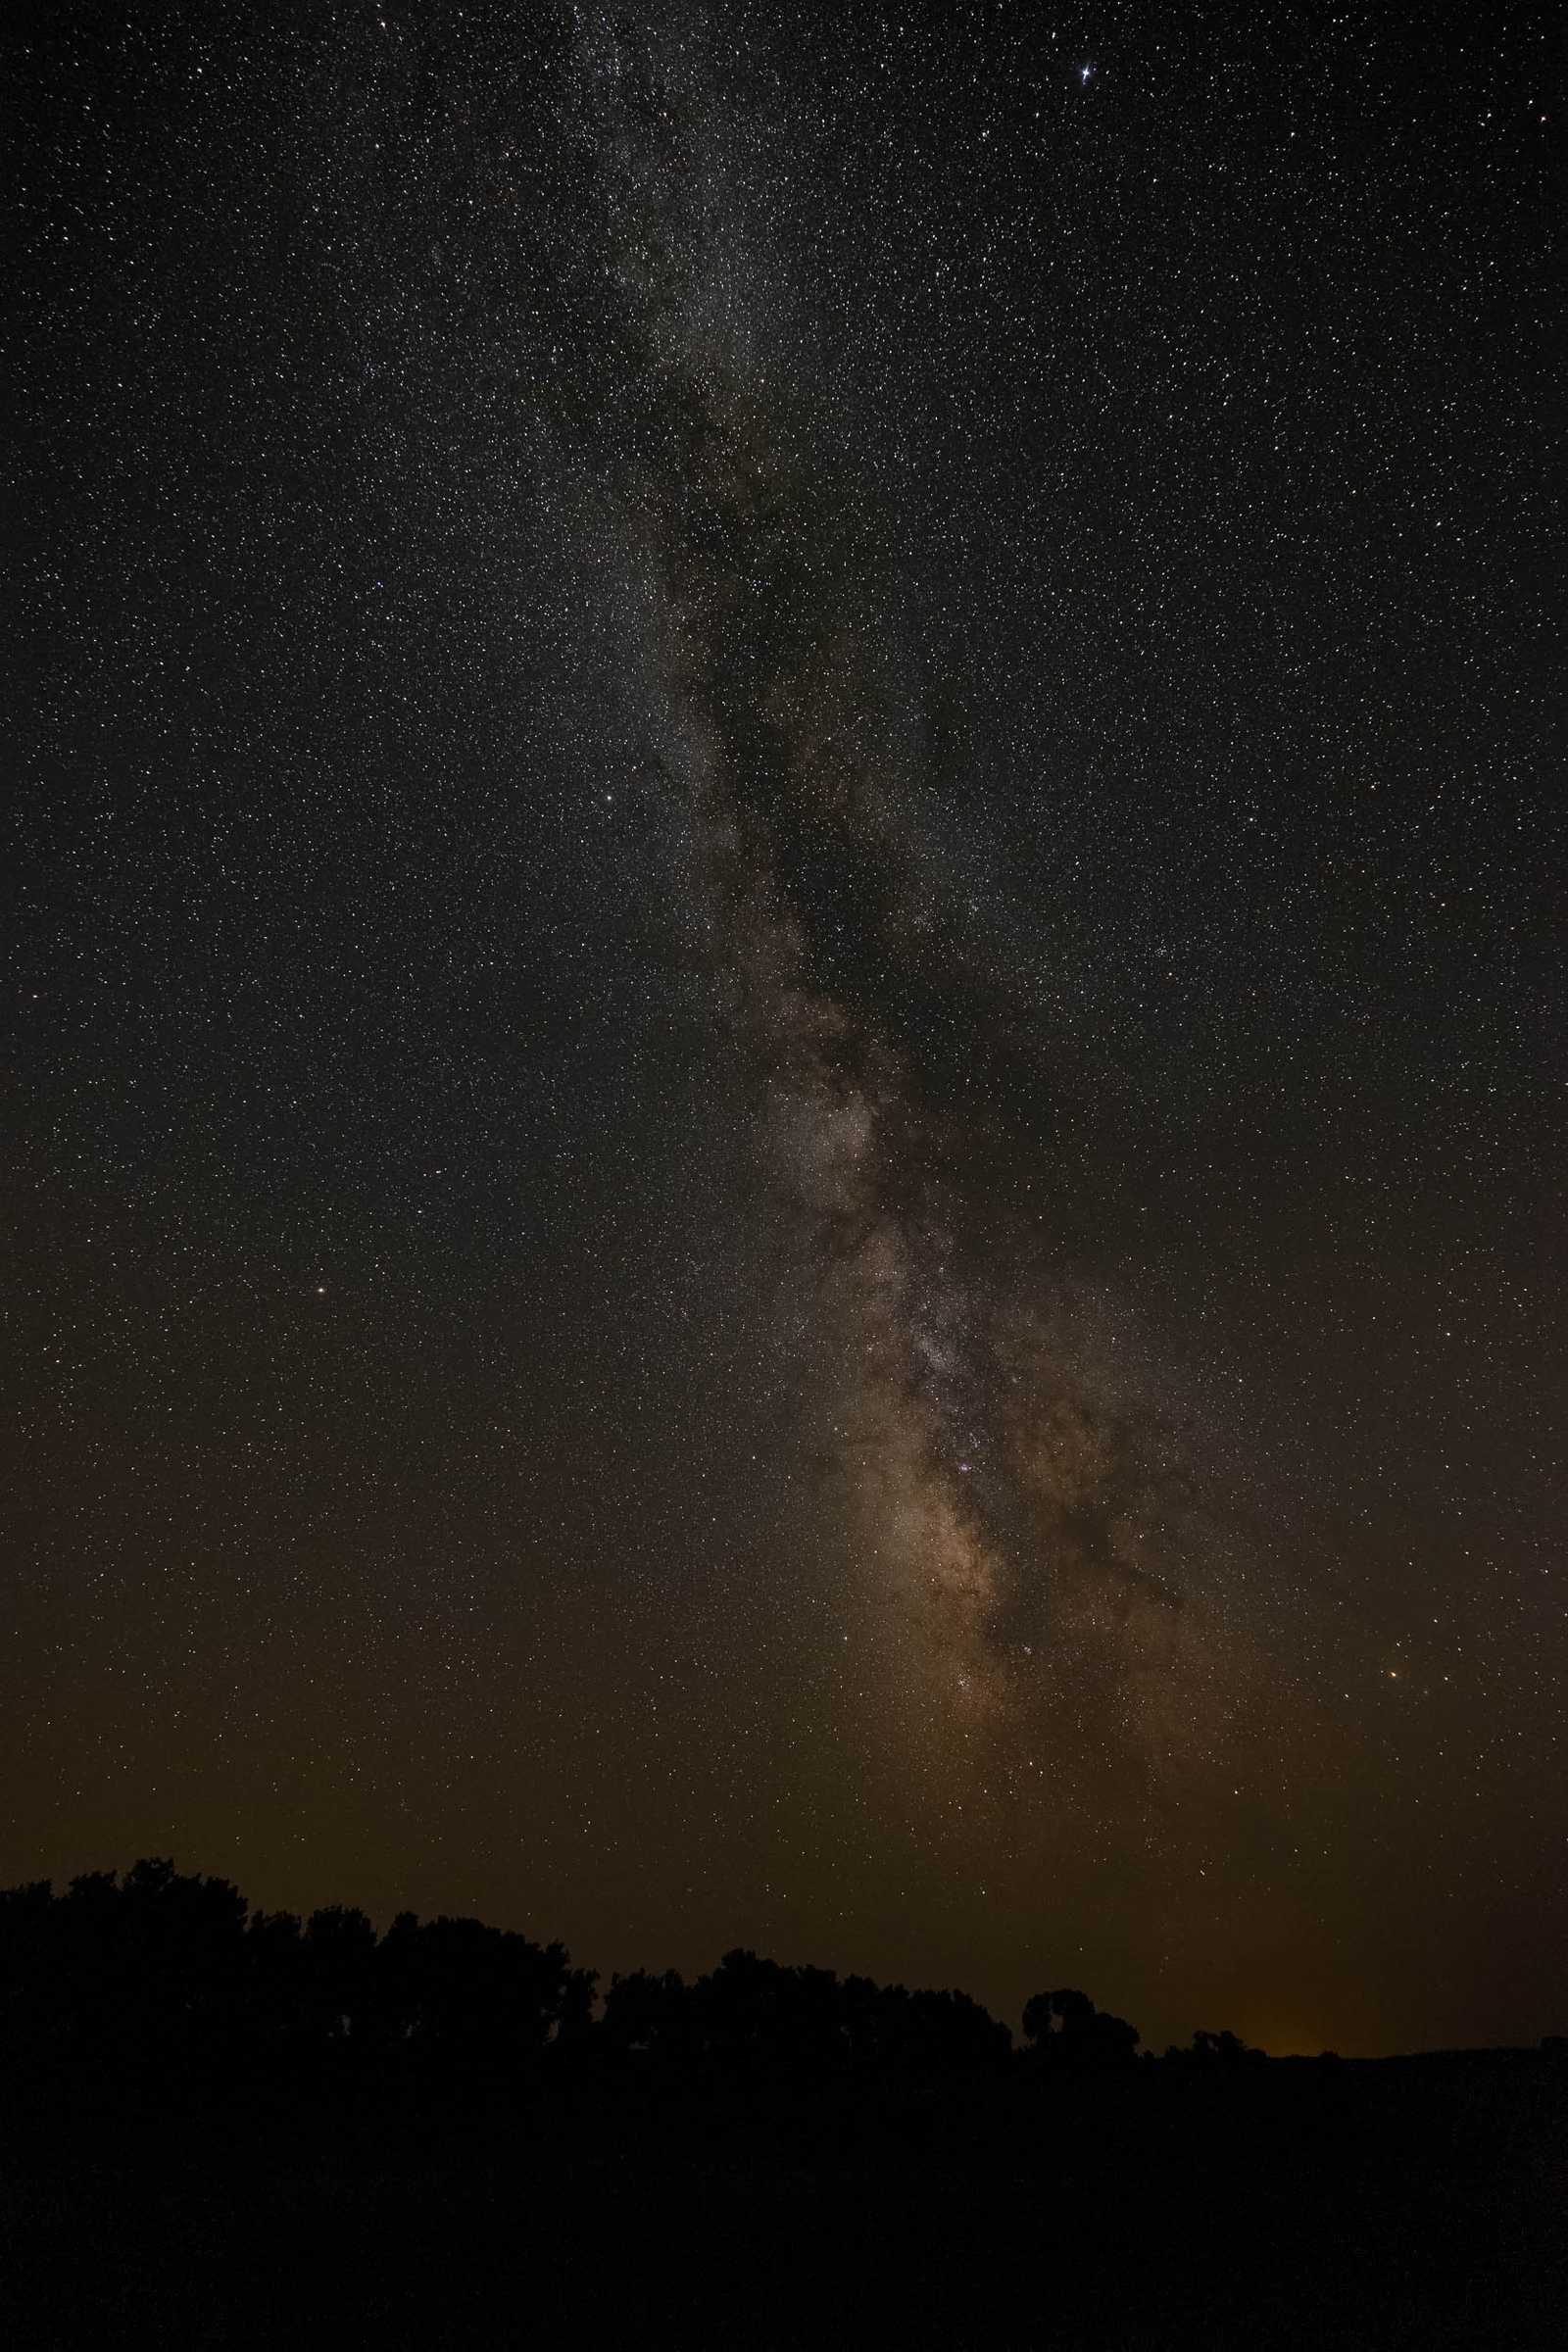 The Milky Way above the Oklahoma skyline